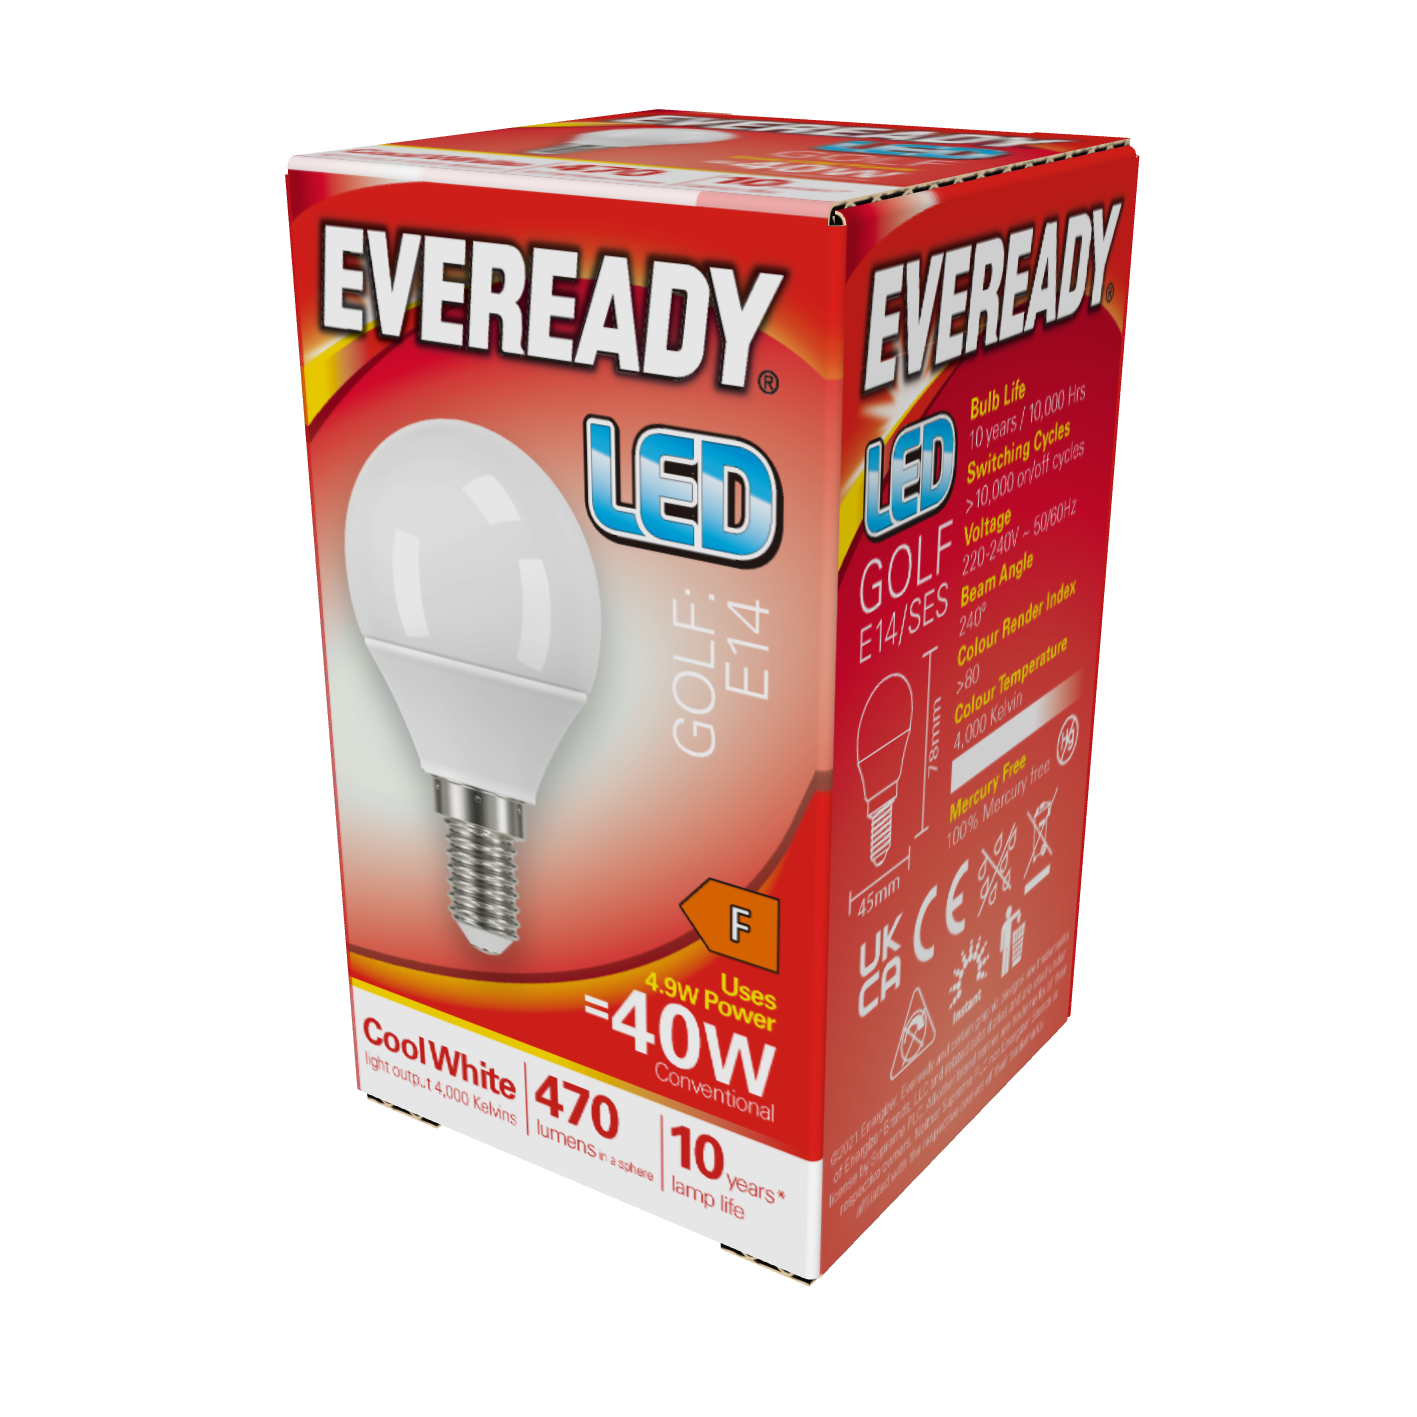 Eveready LED Golf E14 (SES) 470lm 4.9W 4,000K (Cool White), Box of 1